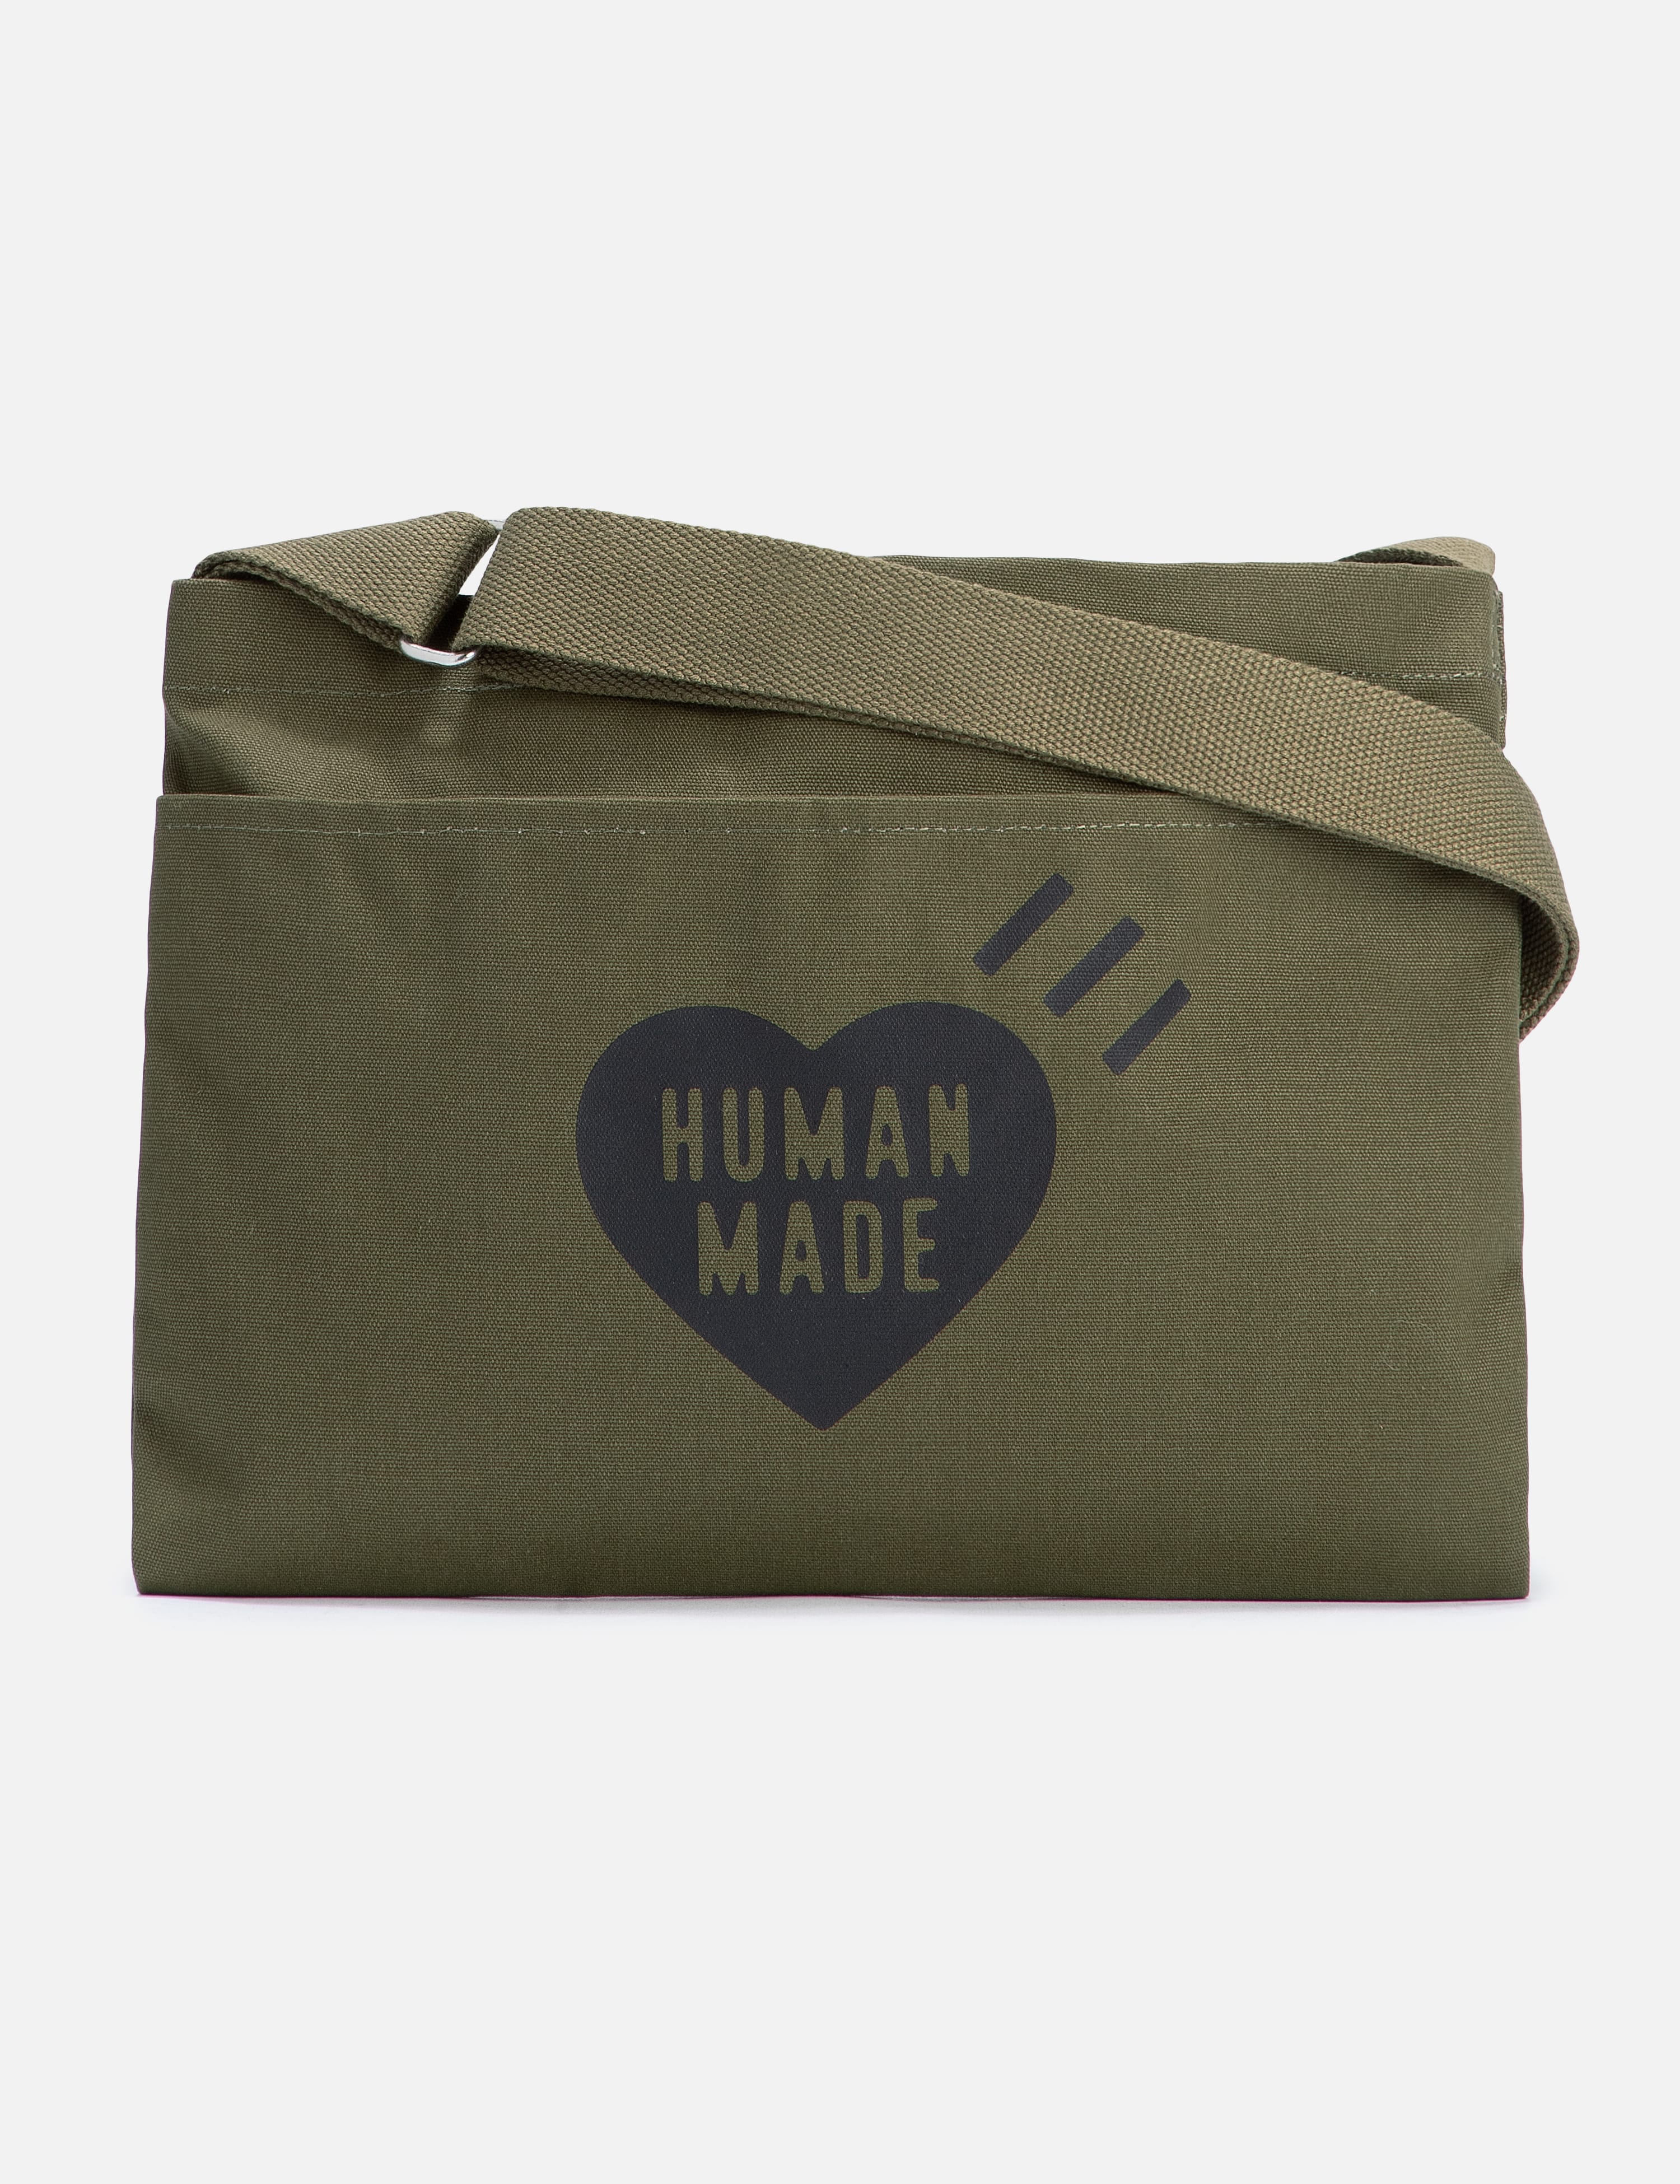 Human Made - 2Way Shoulder Bag | HBX - Globally Curated 